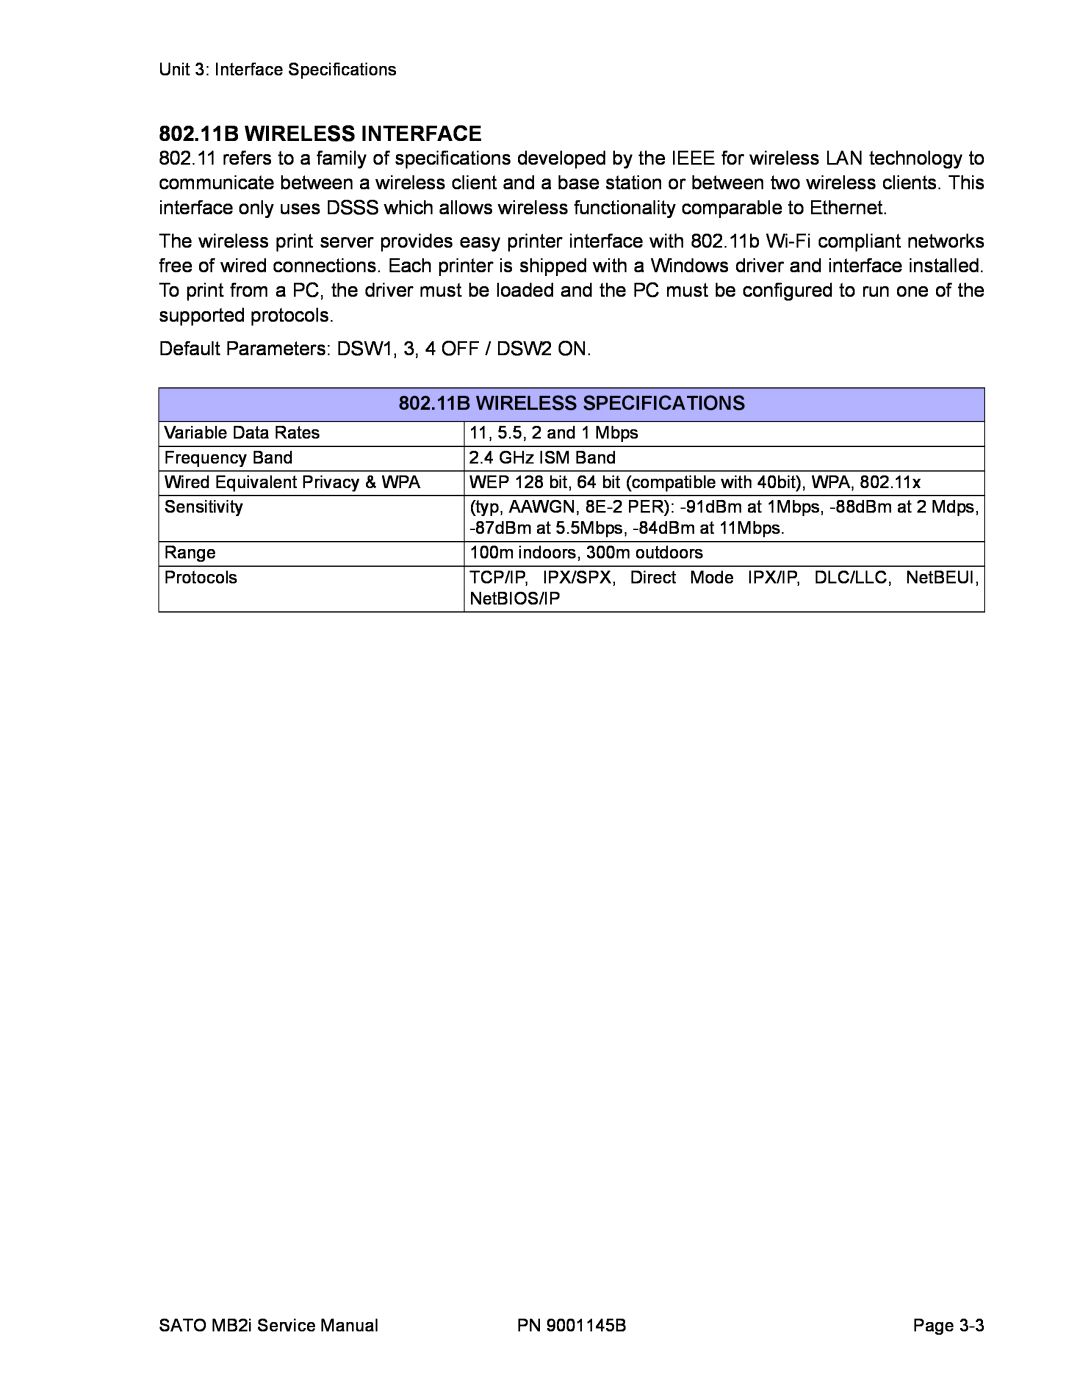 SATO 200i manual 802.11B WIRELESS INTERFACE, 802.11B WIRELESS SPECIFICATIONS 